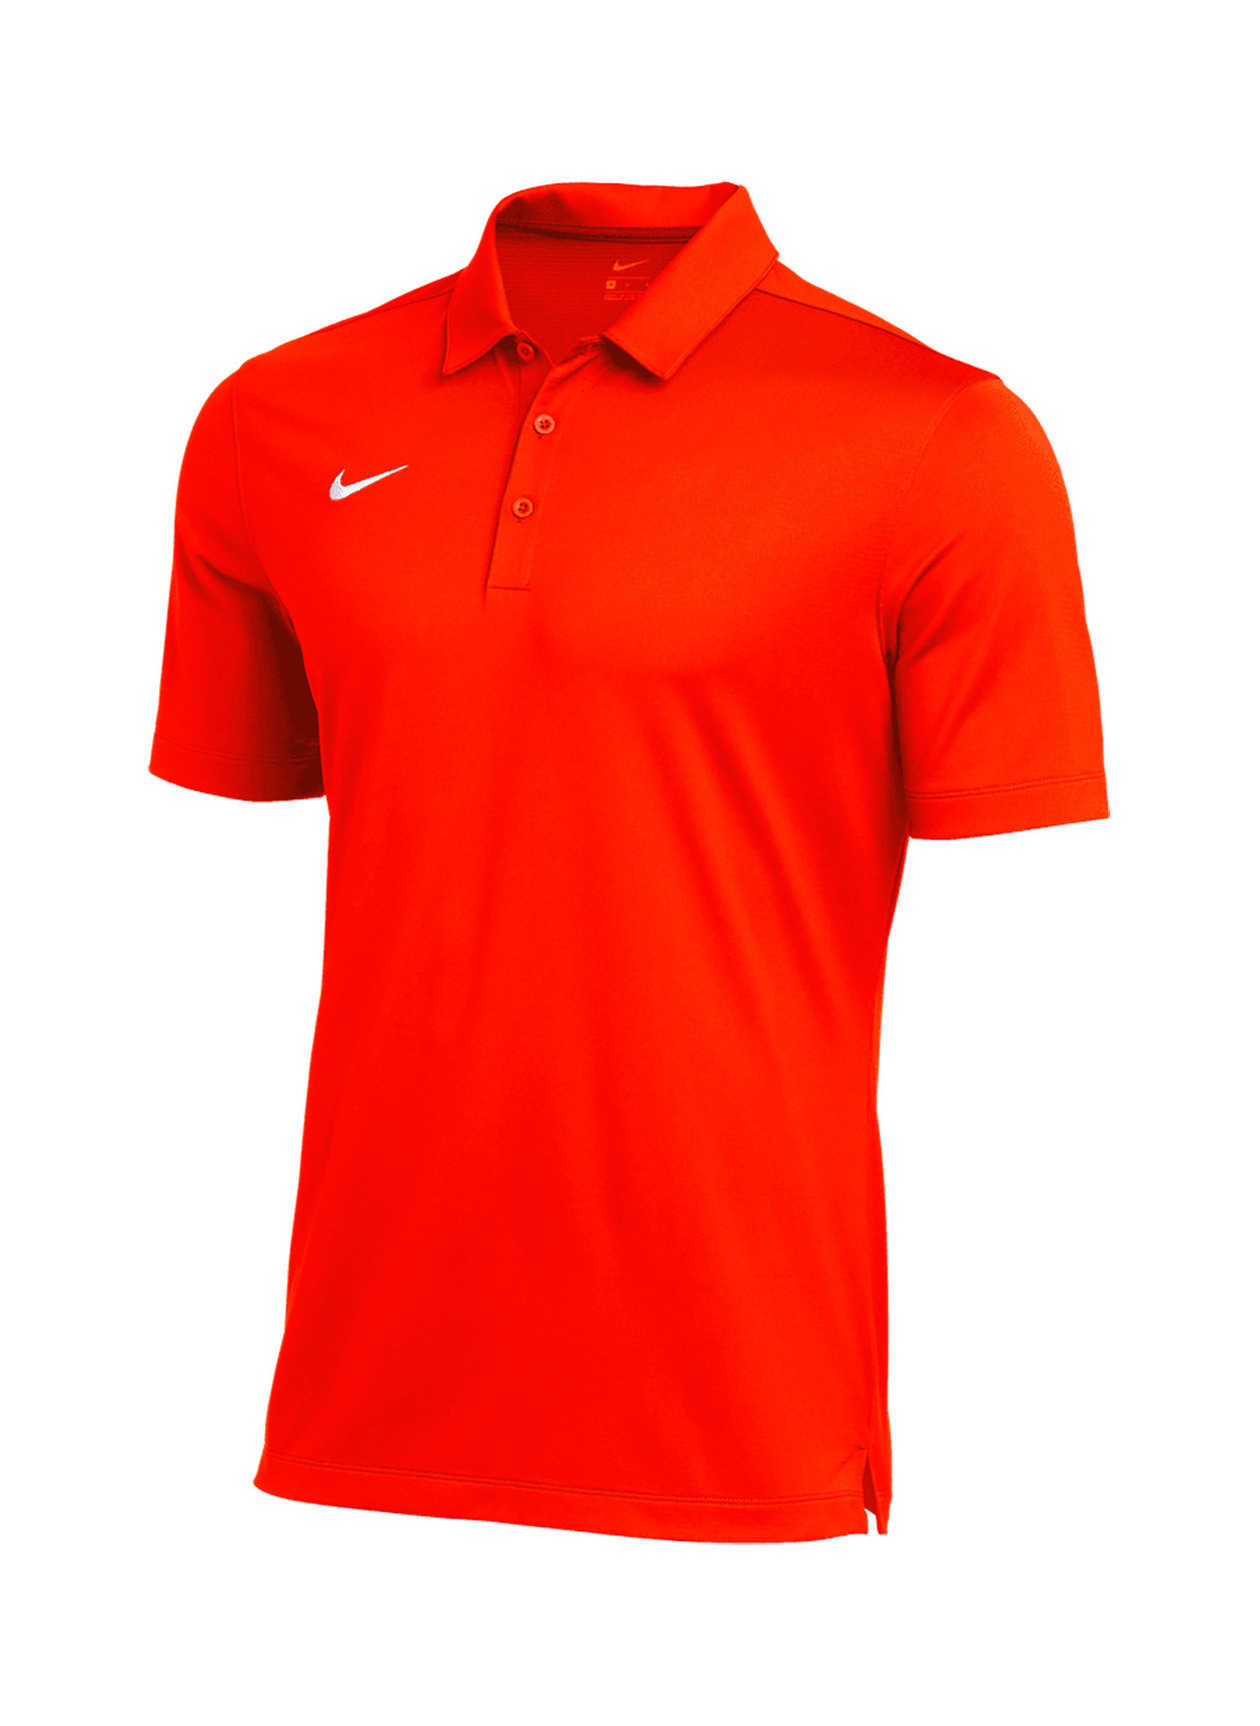 Nike Men's Team Orange / White Dri-FIT Franchise Polo